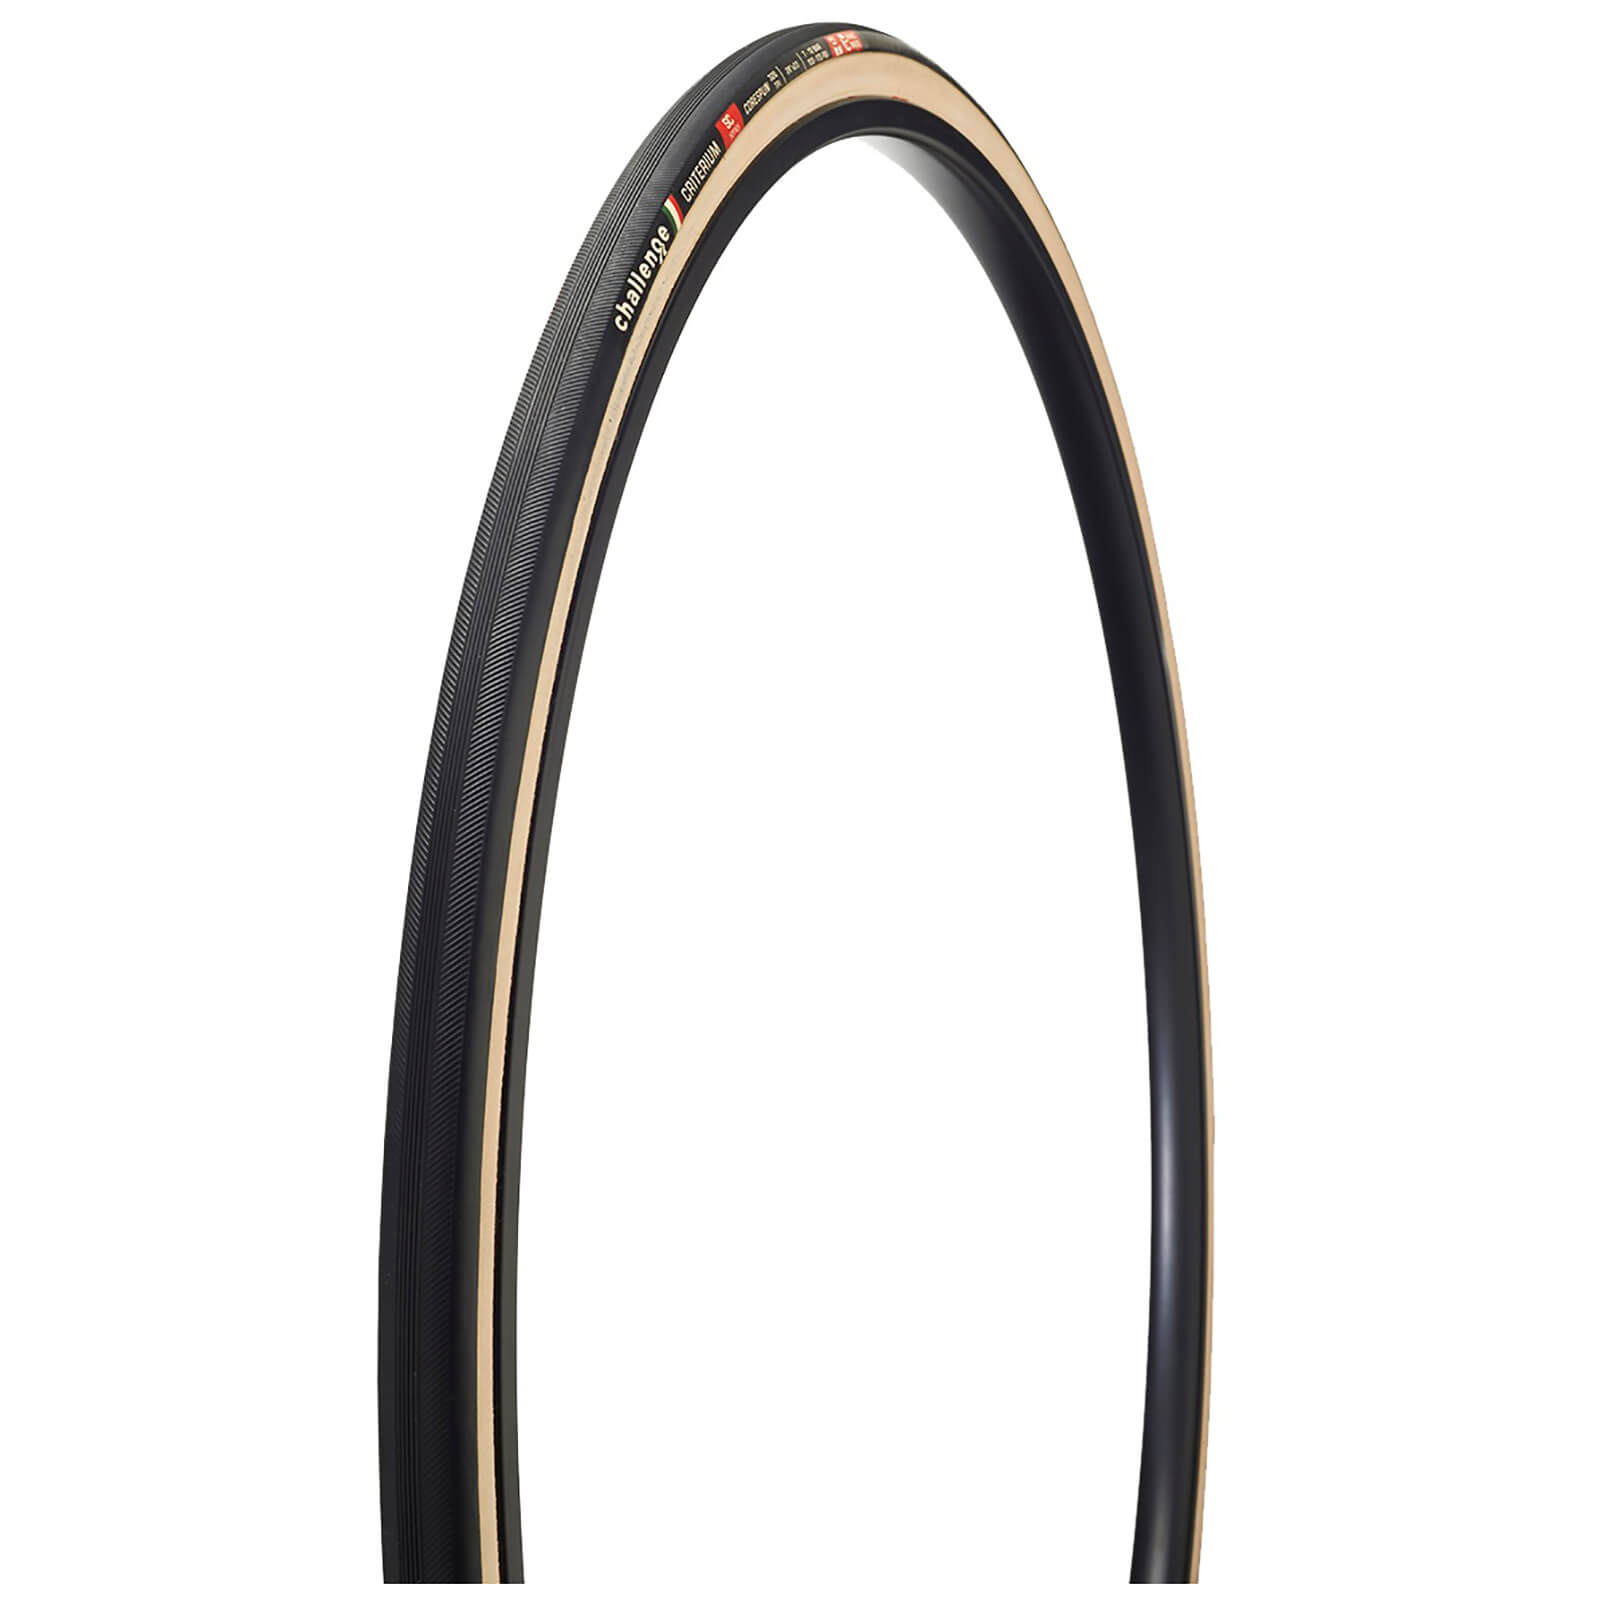 Challenge Criterium Tubular Road Tyre - Black/Tan - 700c x 25mm